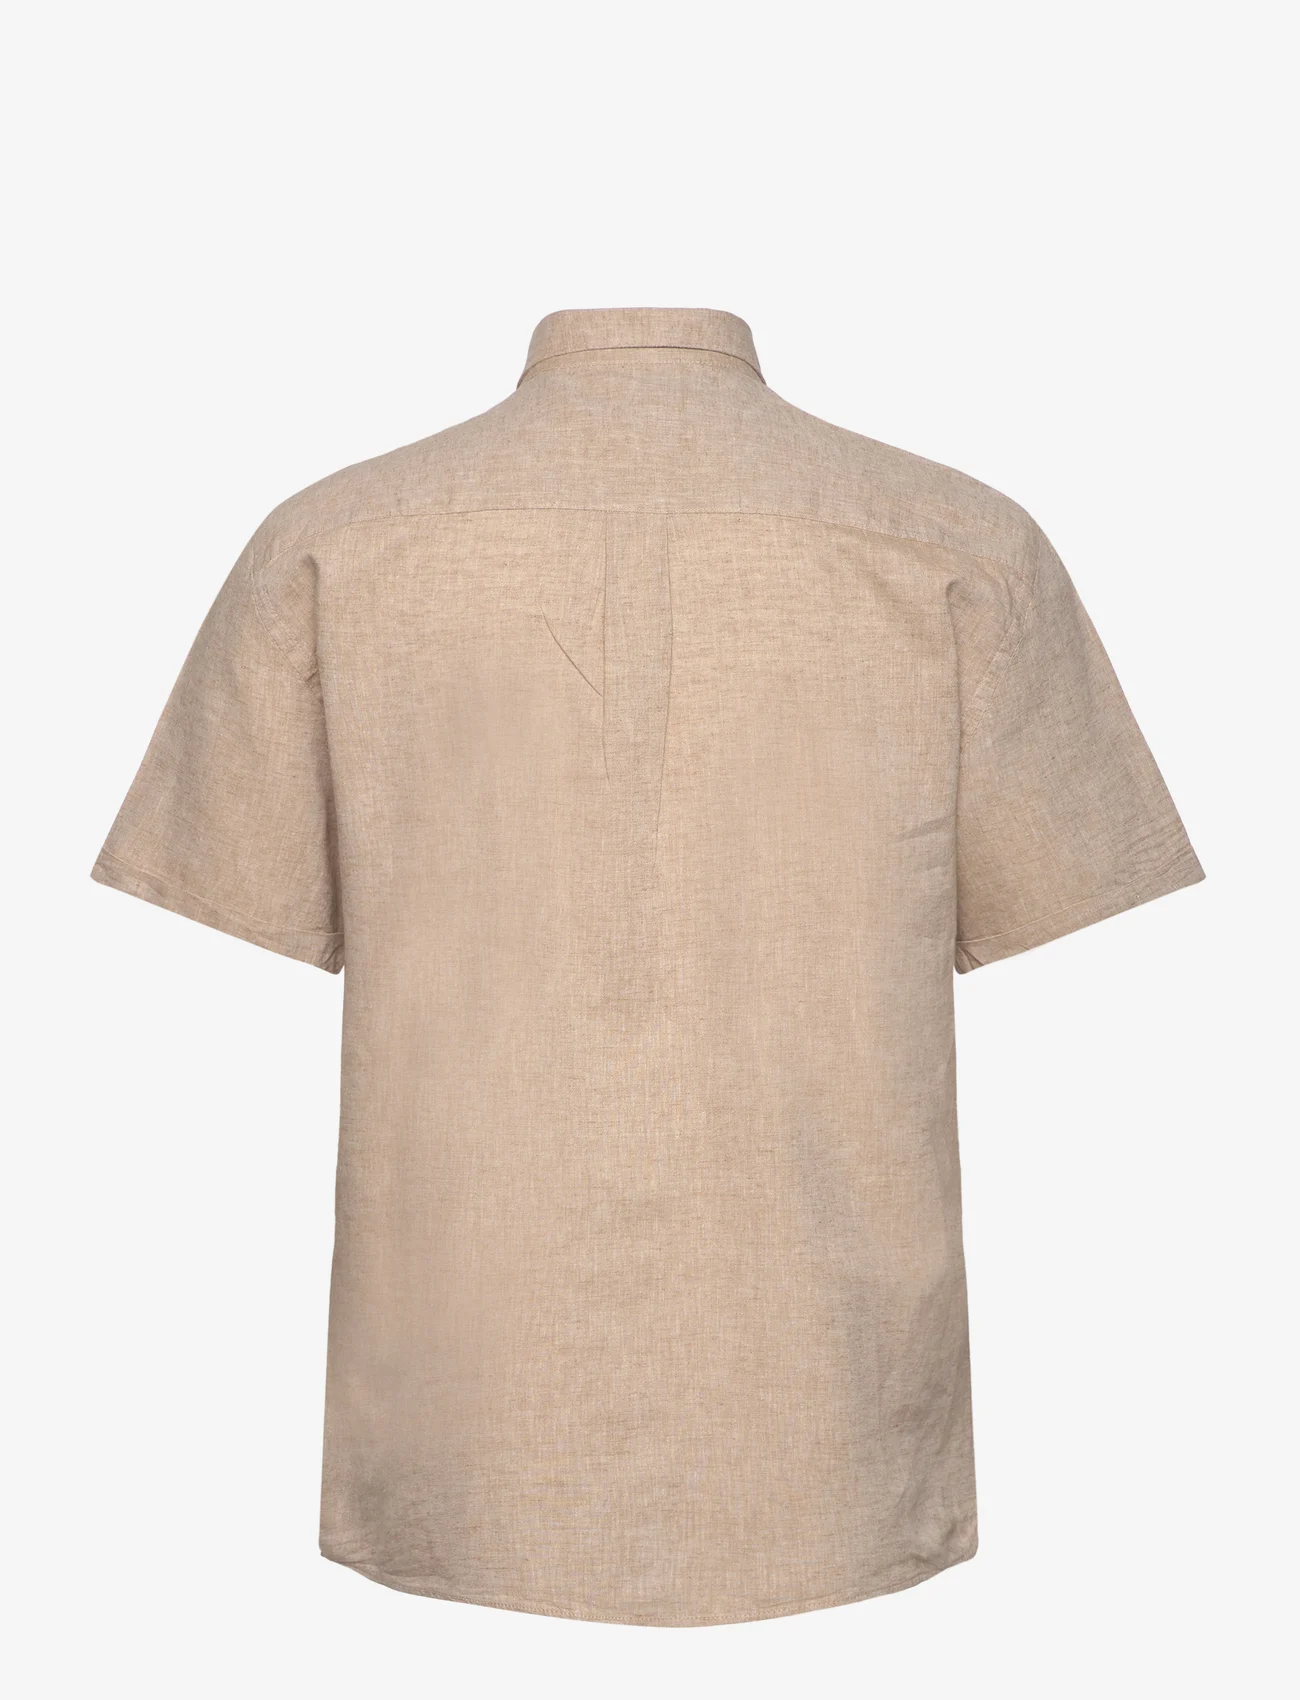 Lindbergh - Cotton/linen shirt S/S - linskjorter - mid sand - 1